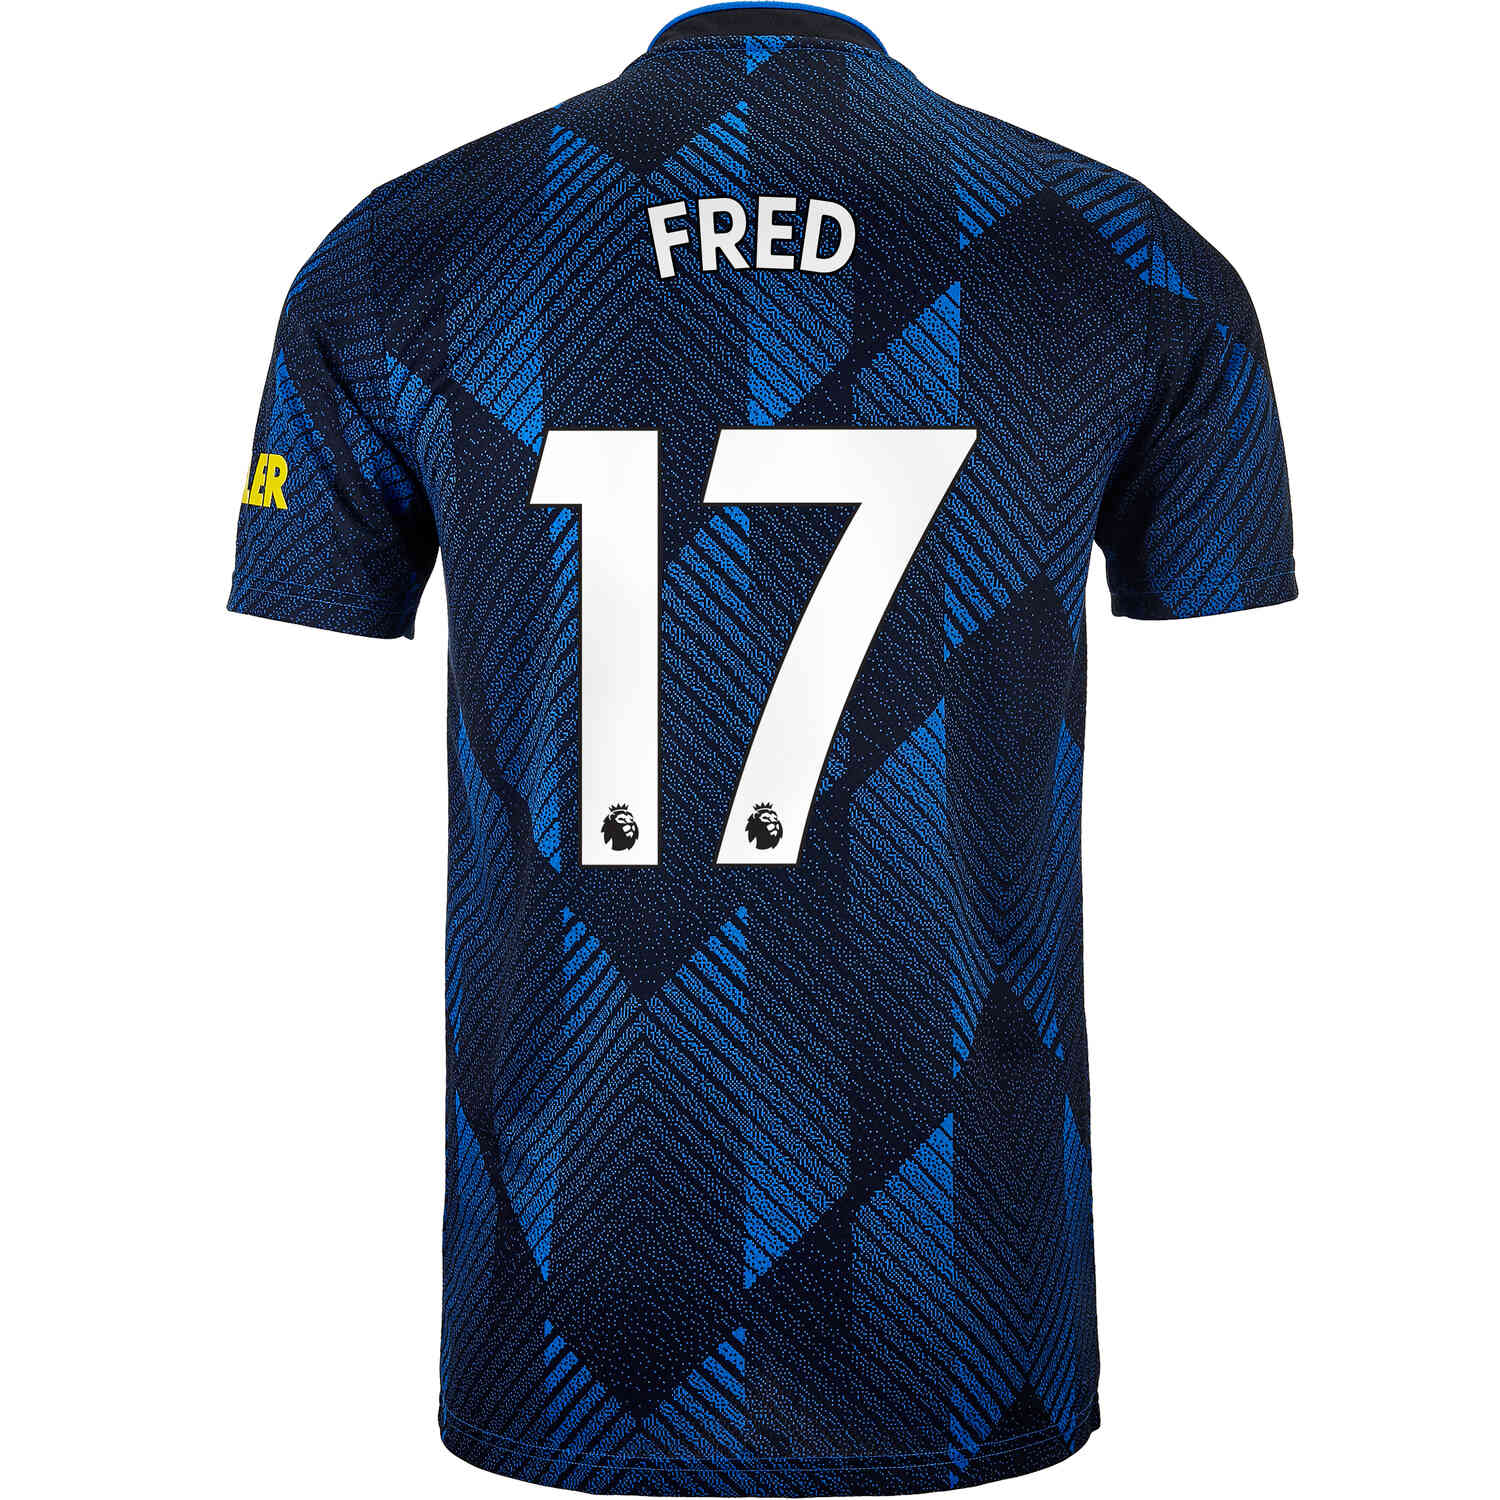 Fred Brazil Jersey - Buy Fred Manchester United Jerseys